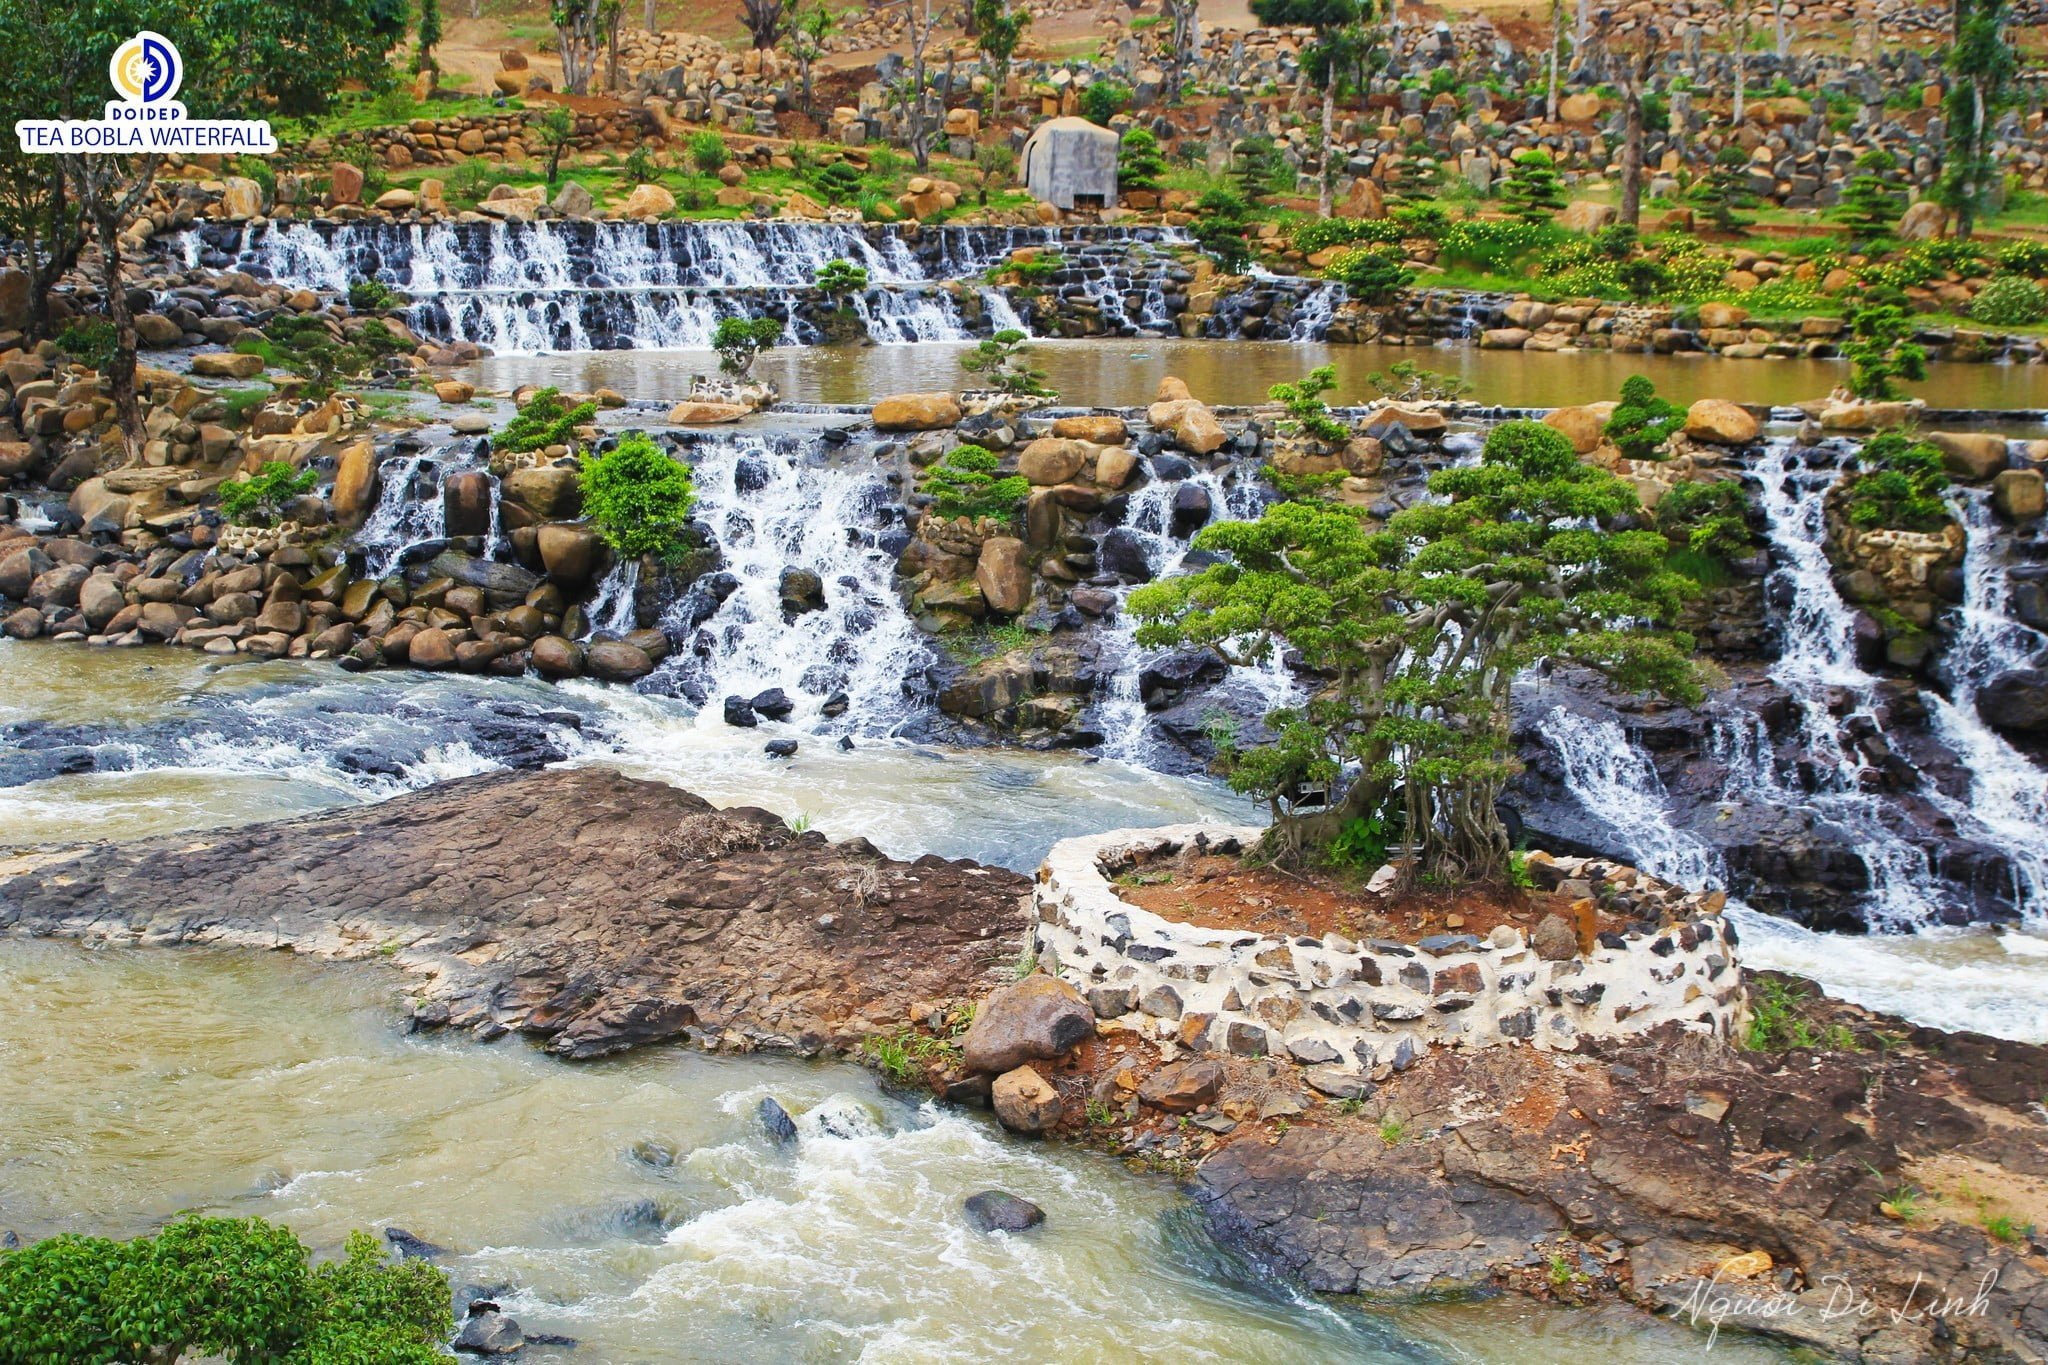 Teabobla Waterfall